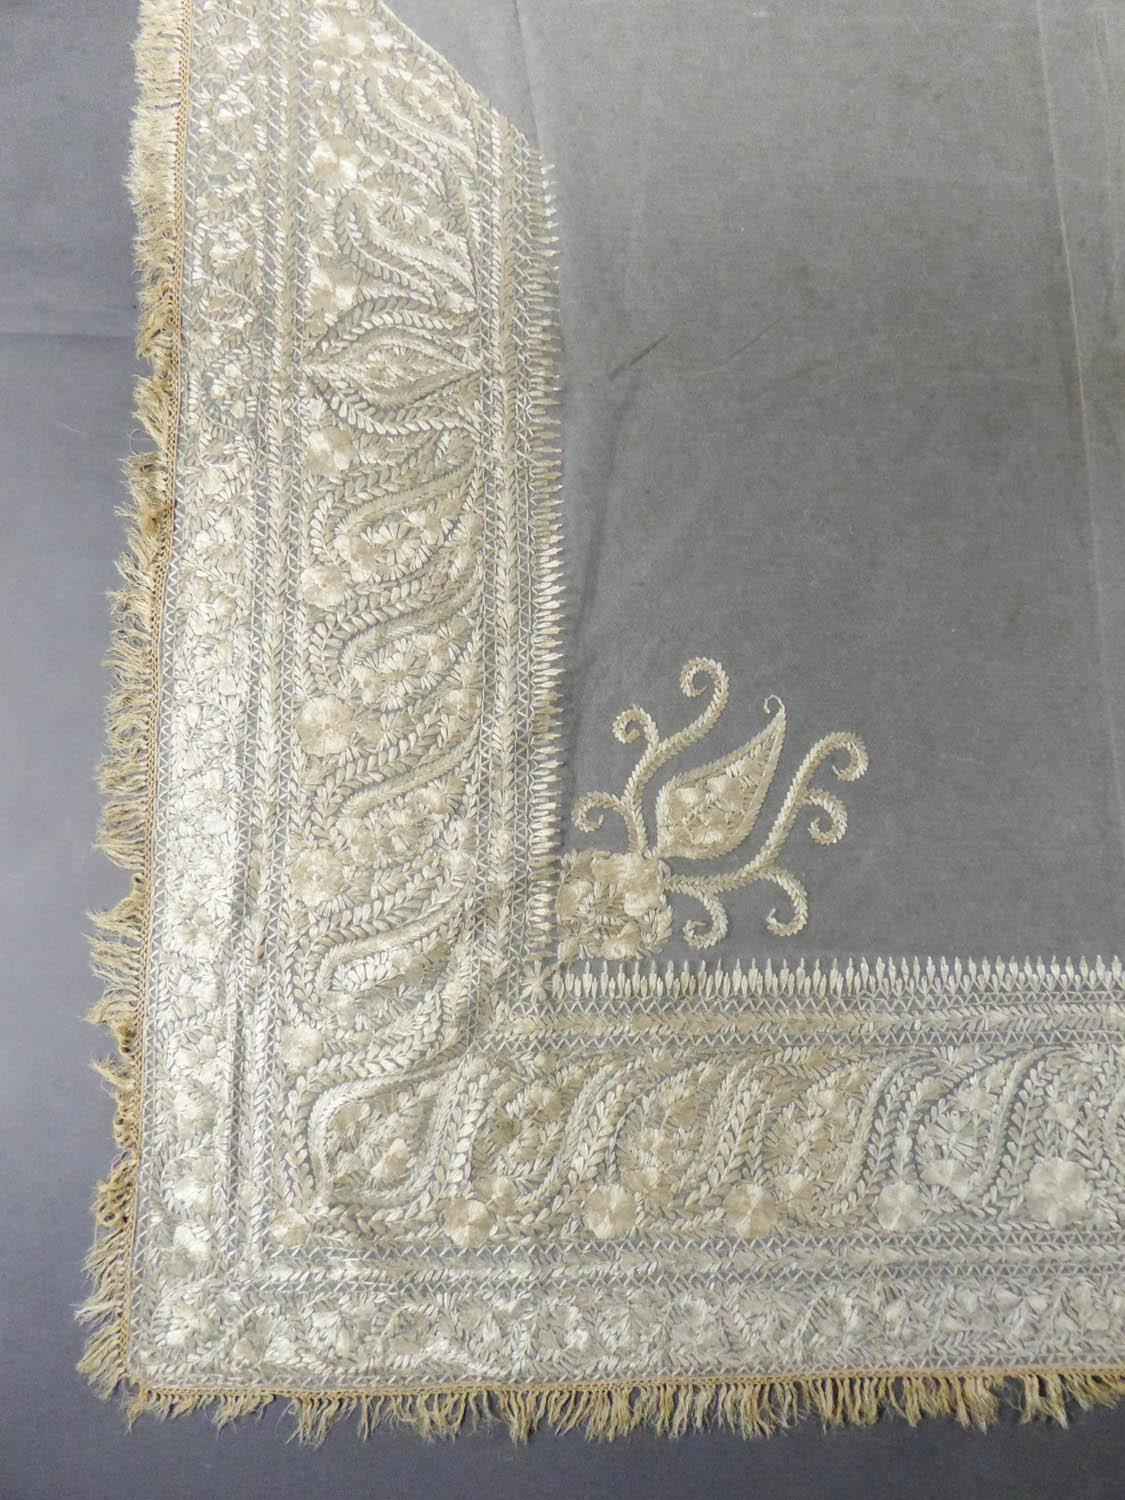 Beige Turn-over shawl in Silk embroidered on Cotton Net - Circa 1840